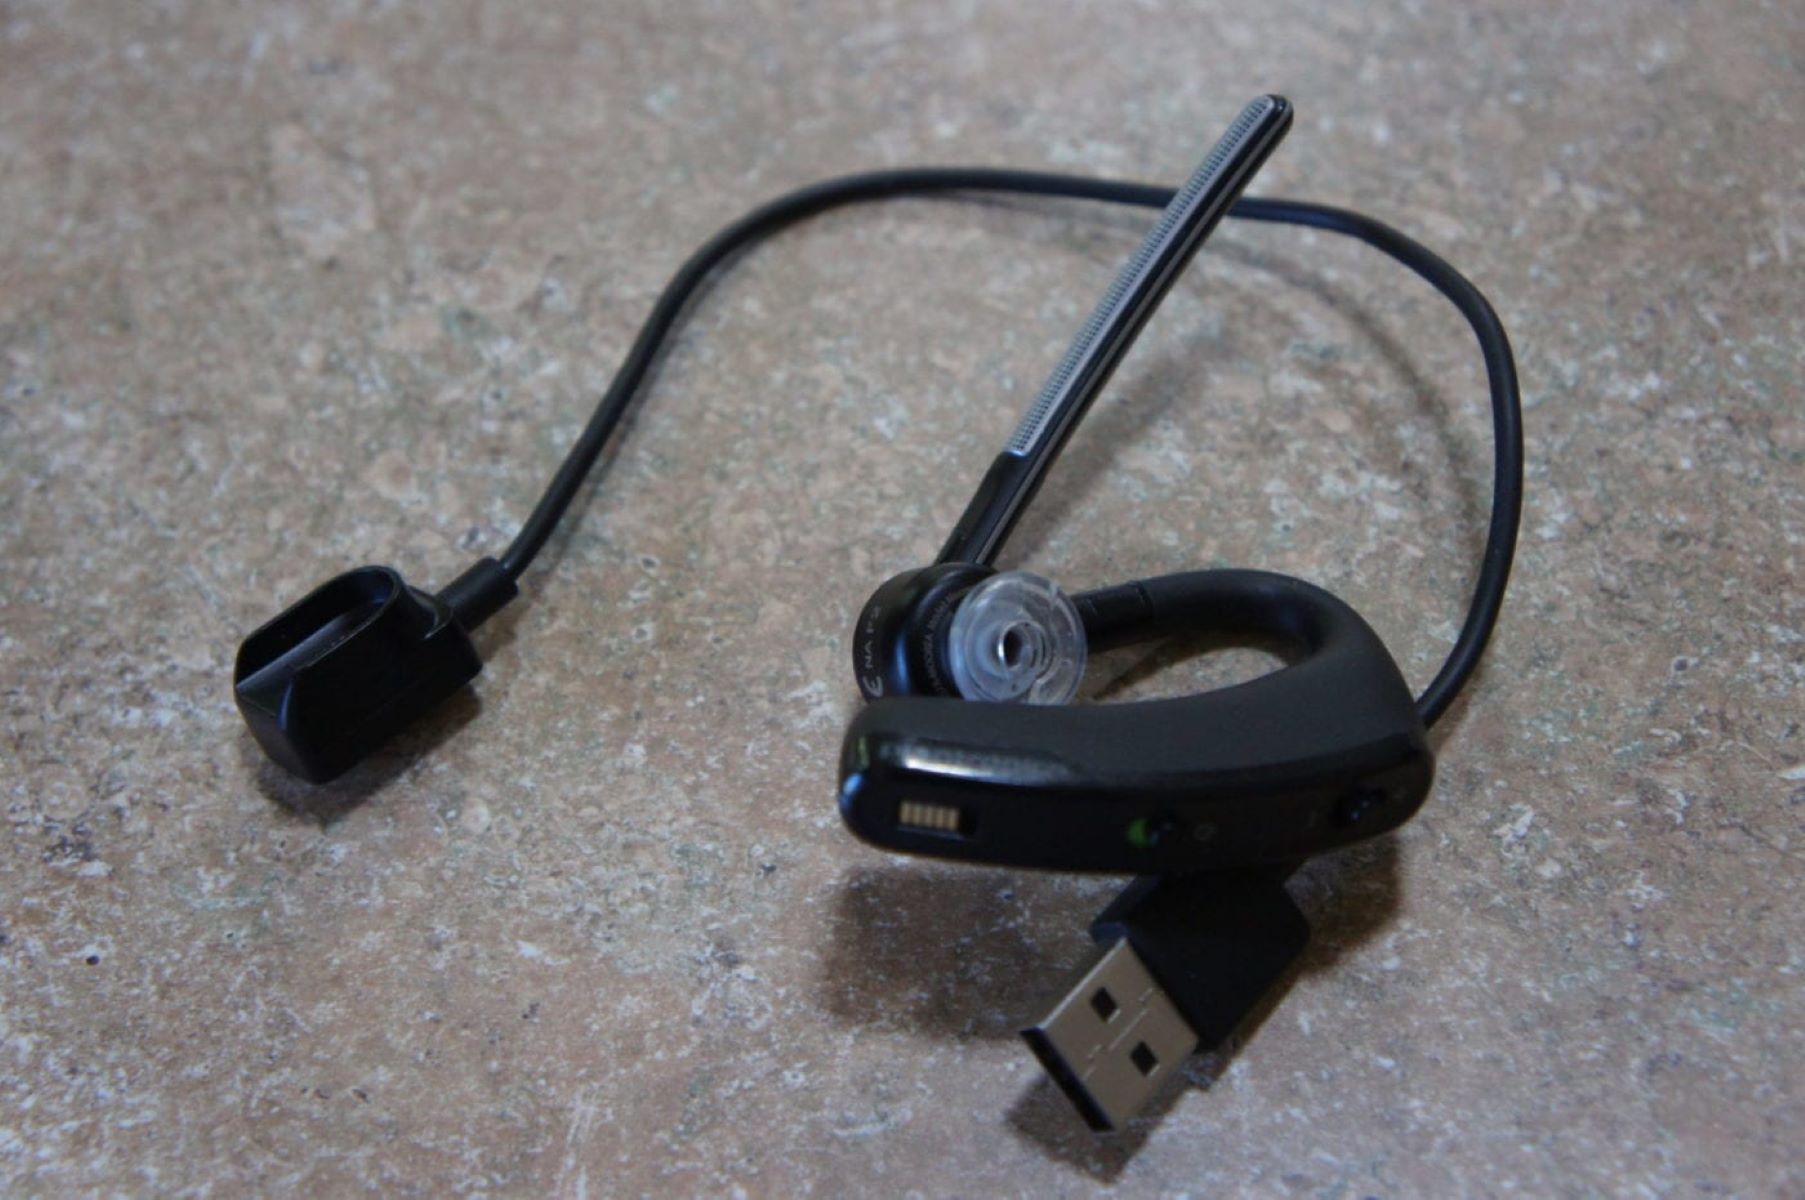 Solving Plantronics Headset Charging Problems